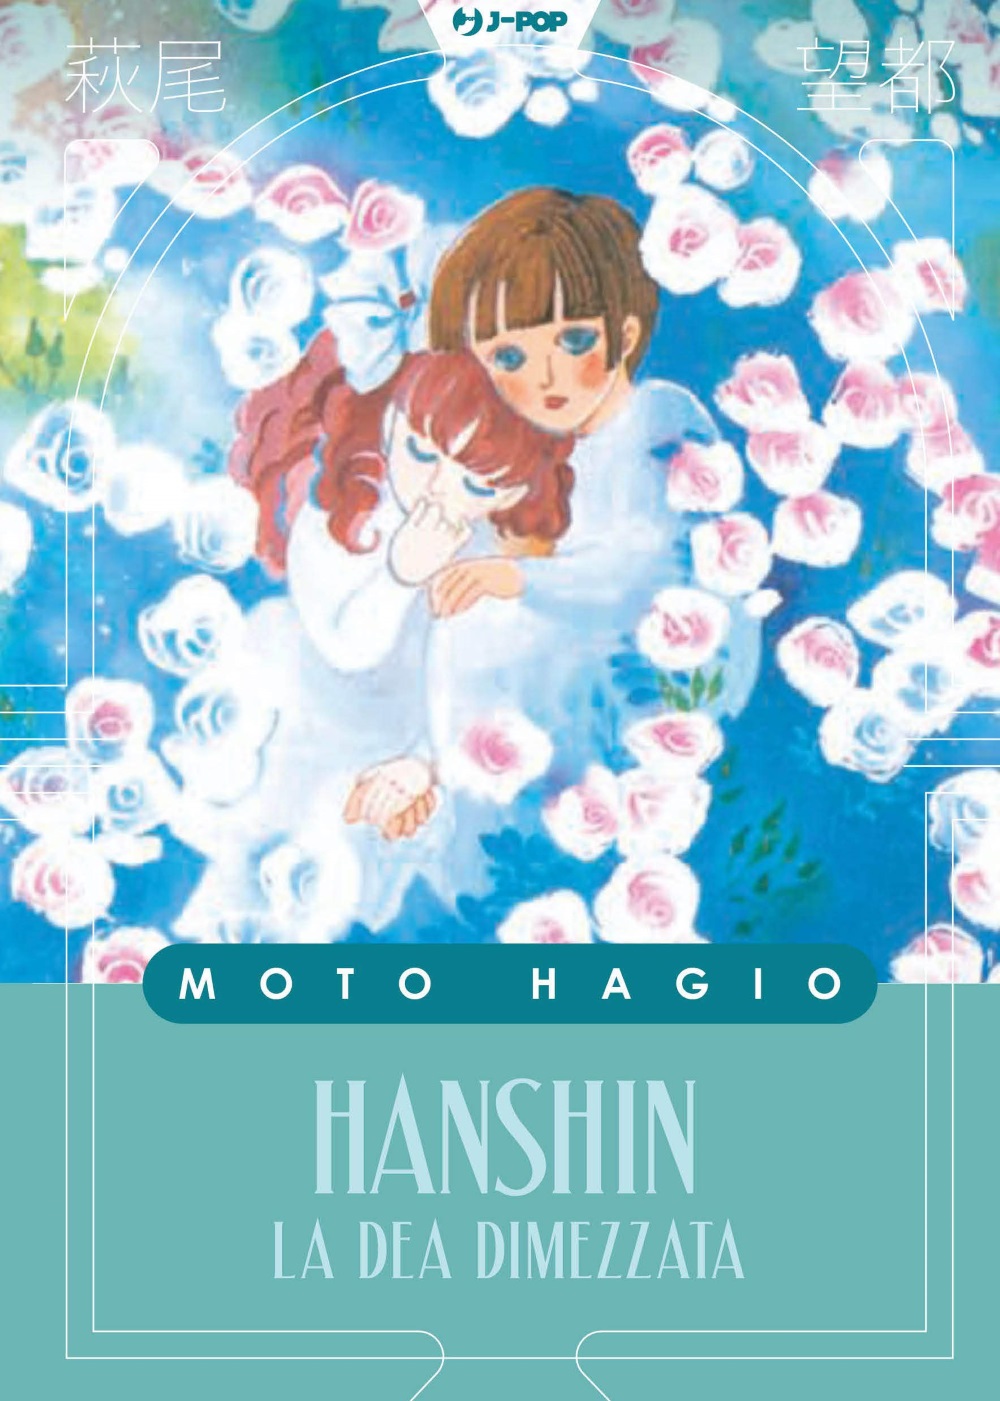 Hanshin Moto Hagio Collection